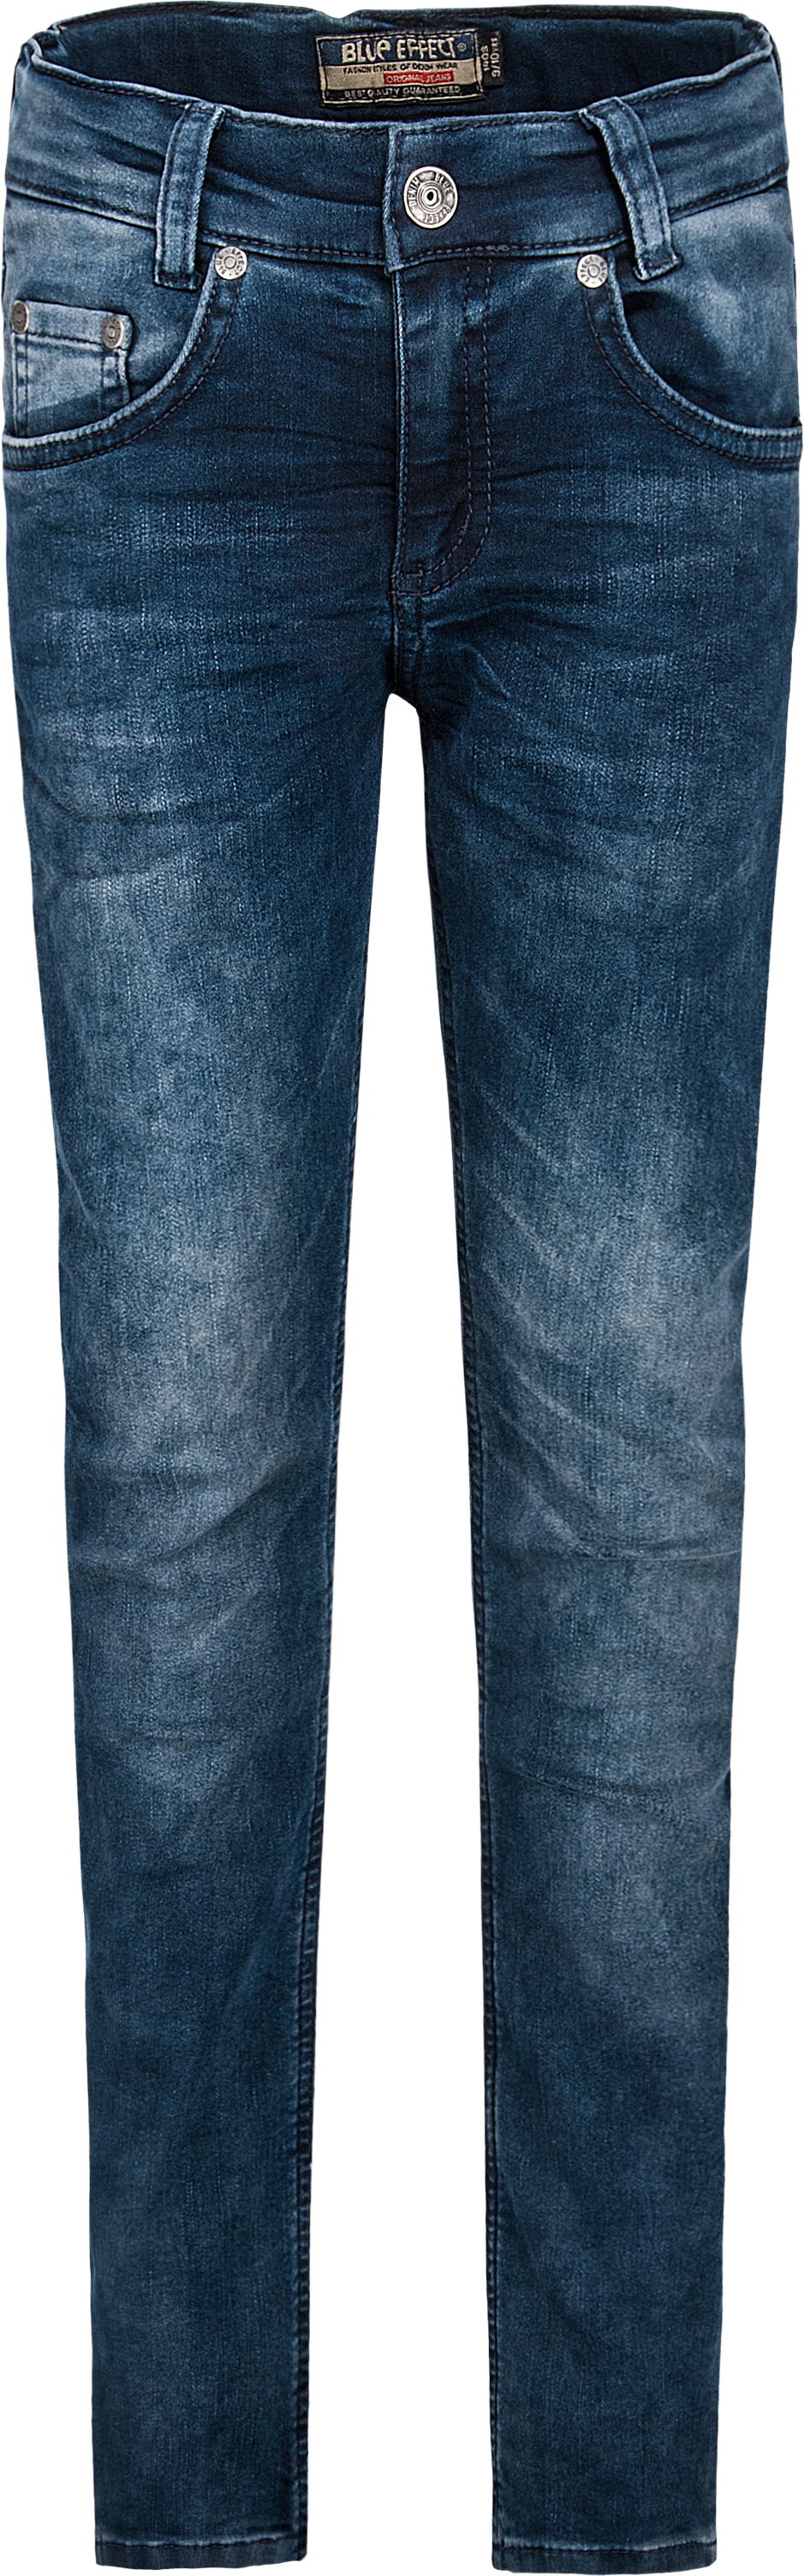 0226-NOS Boys Jeans Special Skinny, Ultrastretch, verfügbar in Slim,Normal,Wide